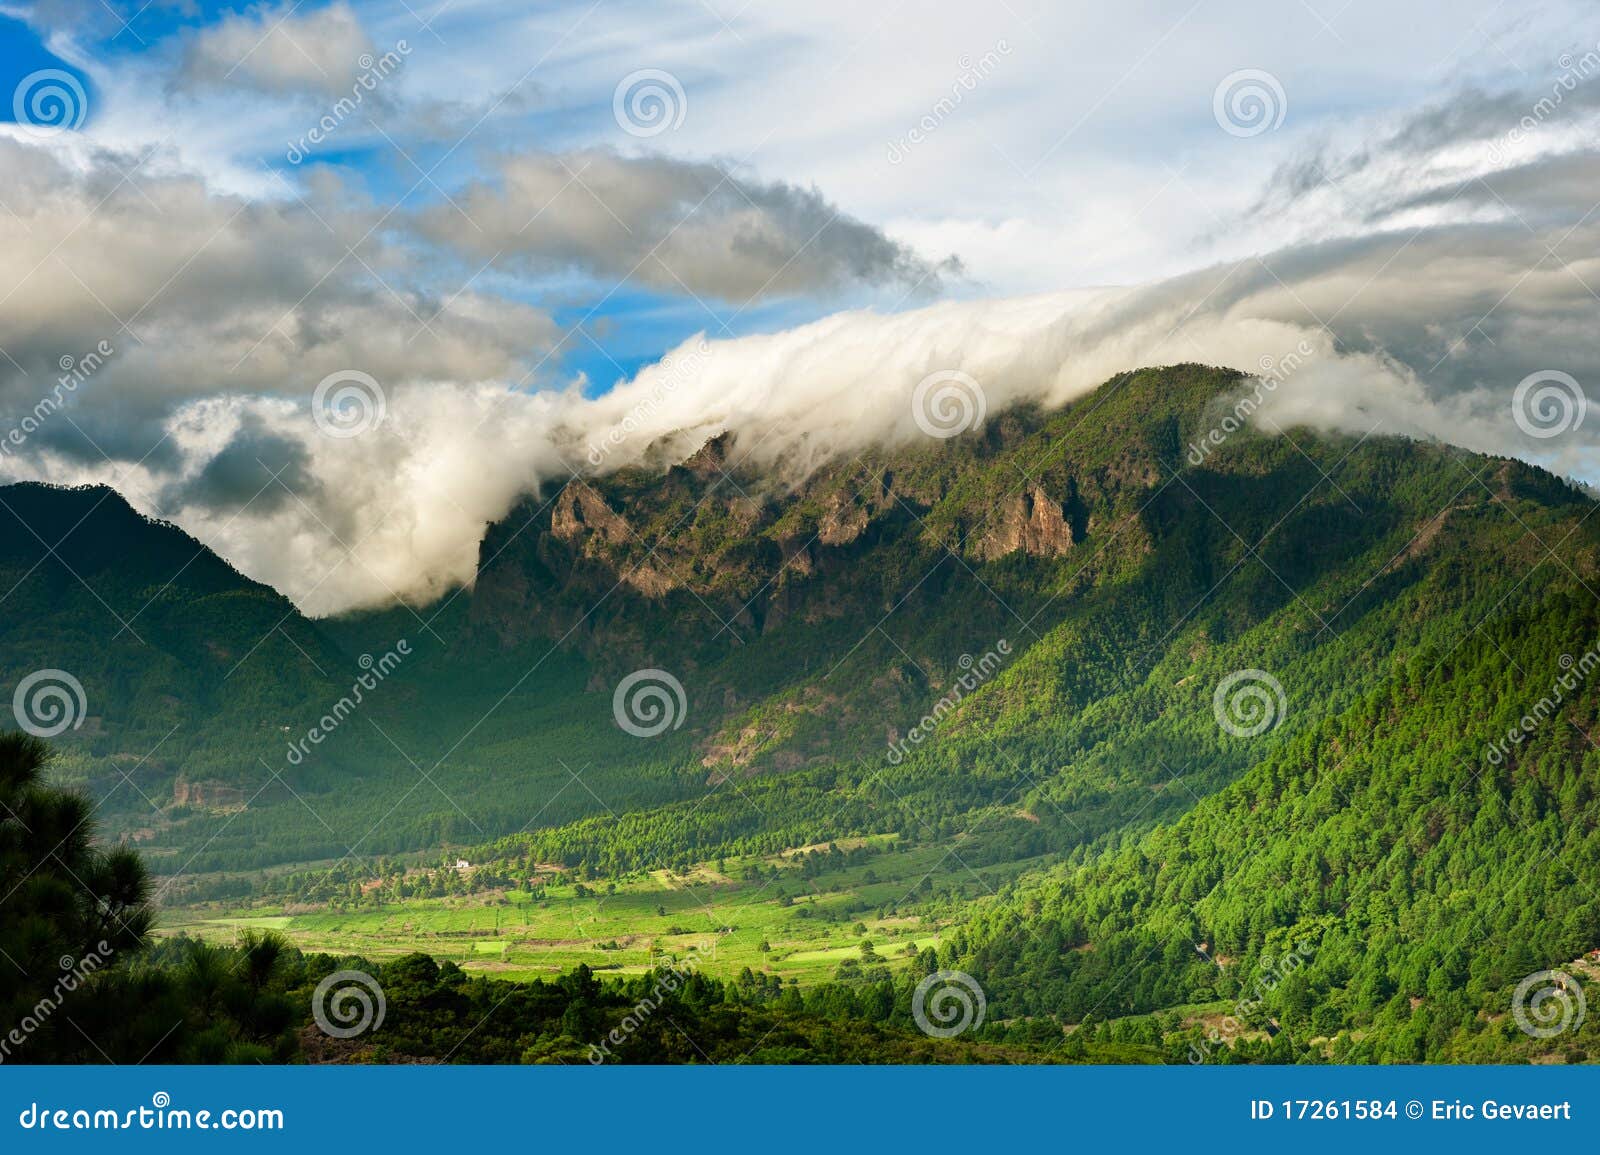 beautiful landscape of the mountains in la palma